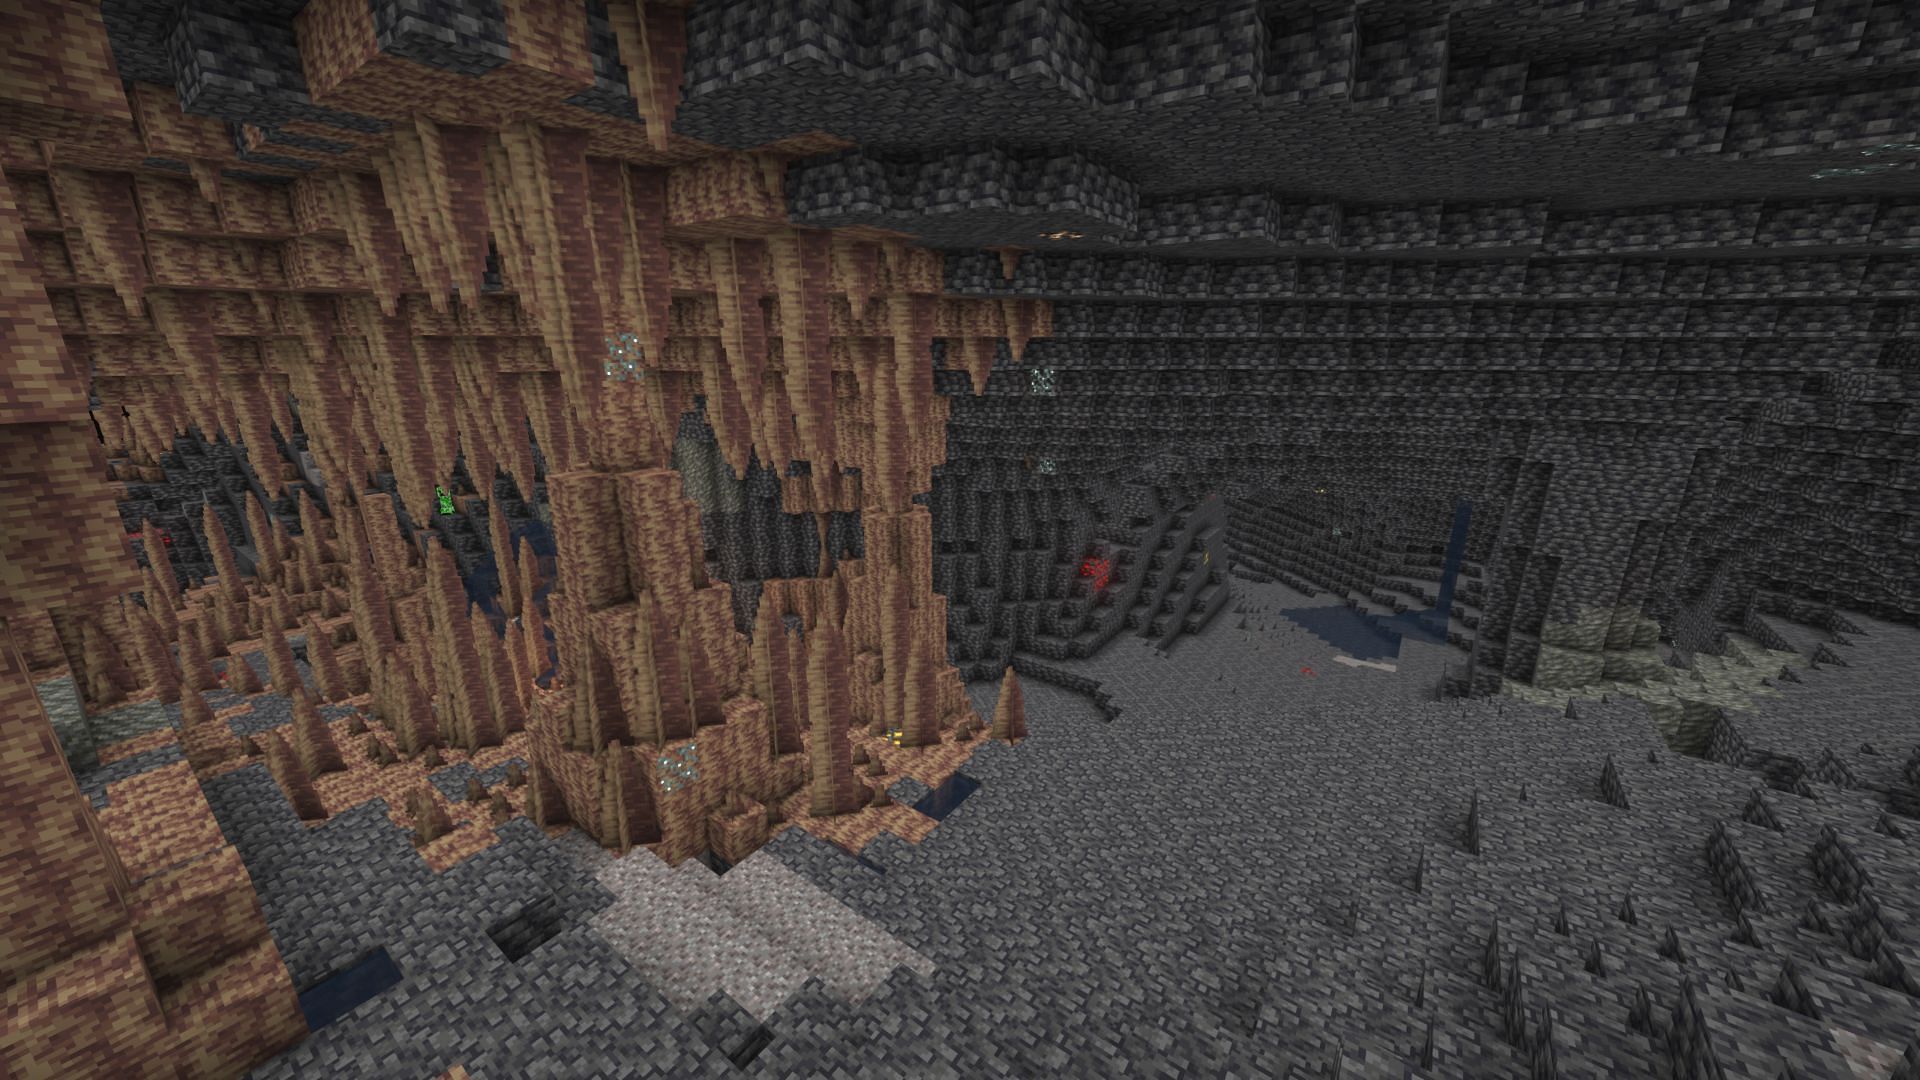 Dripstone cave in Minecraft 1.18 (Image via Mojang)